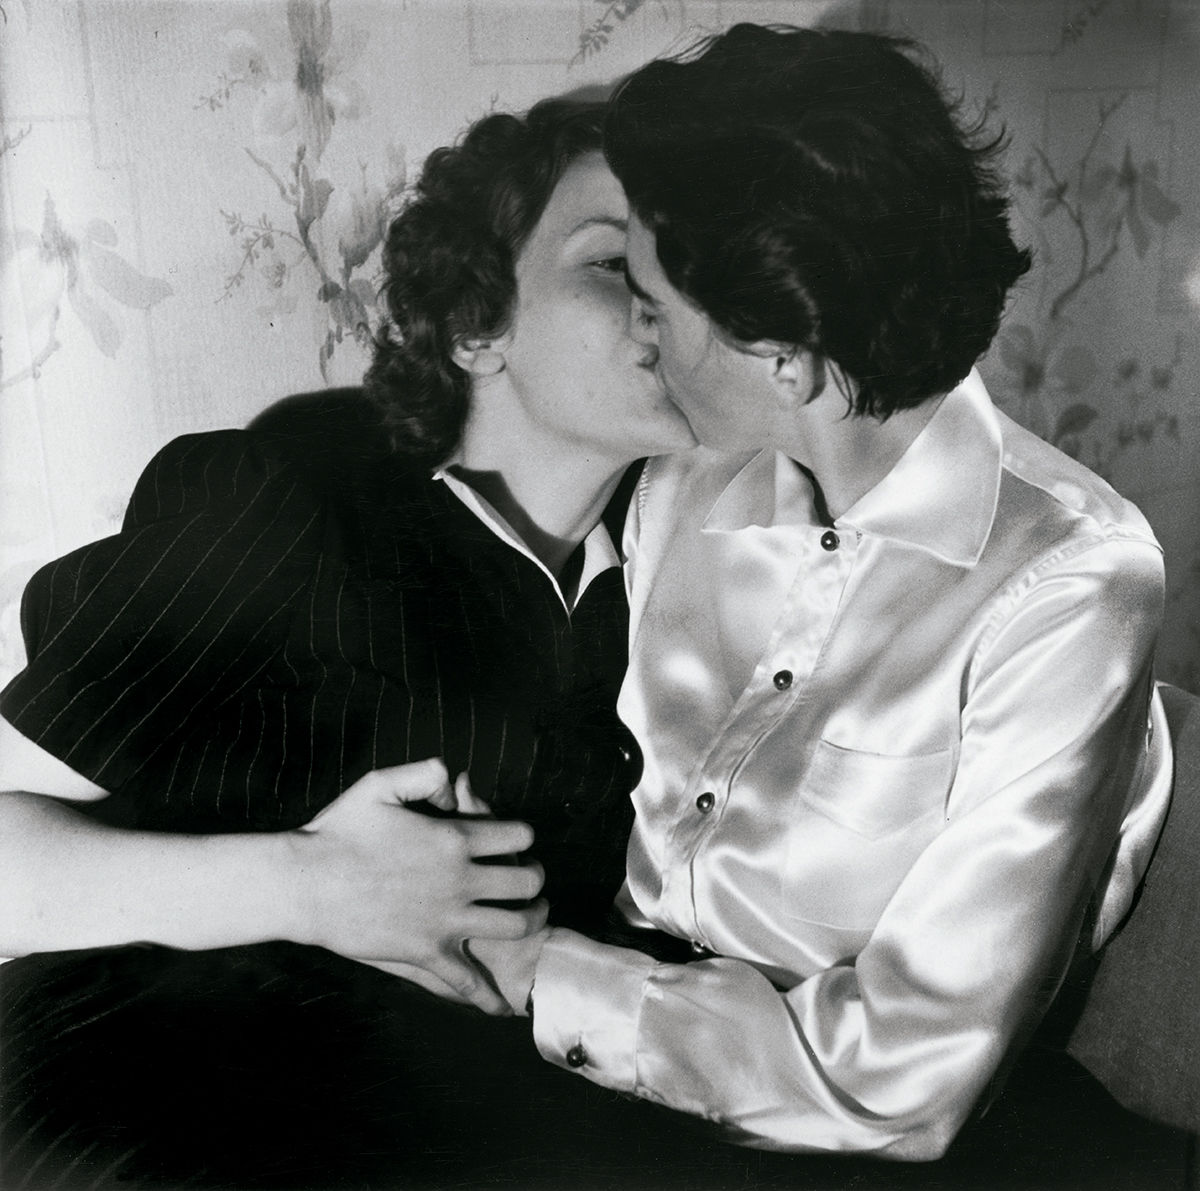 Two women in love © 1999 Arizona Board of Regents, Centre for Creative Photography. © COLECCIONES Fundación MAPFRE